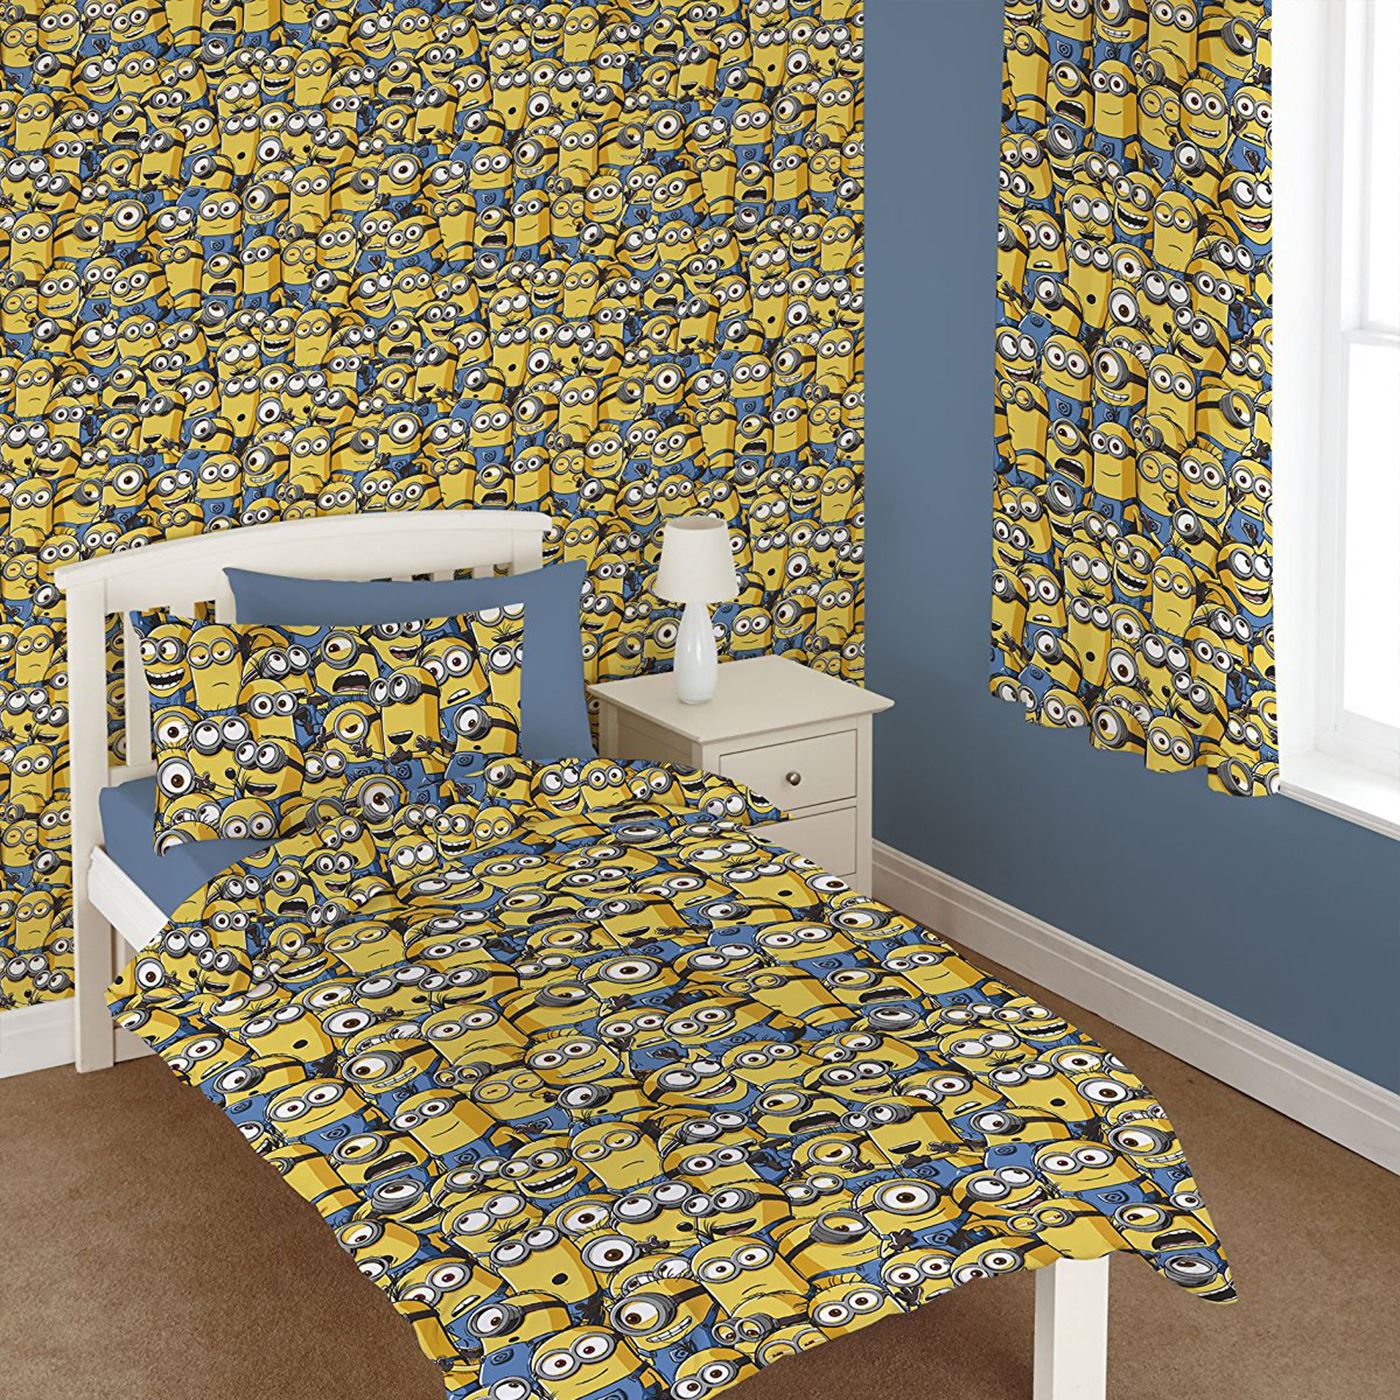 Minions Wallpaper For Room - HD Wallpaper 